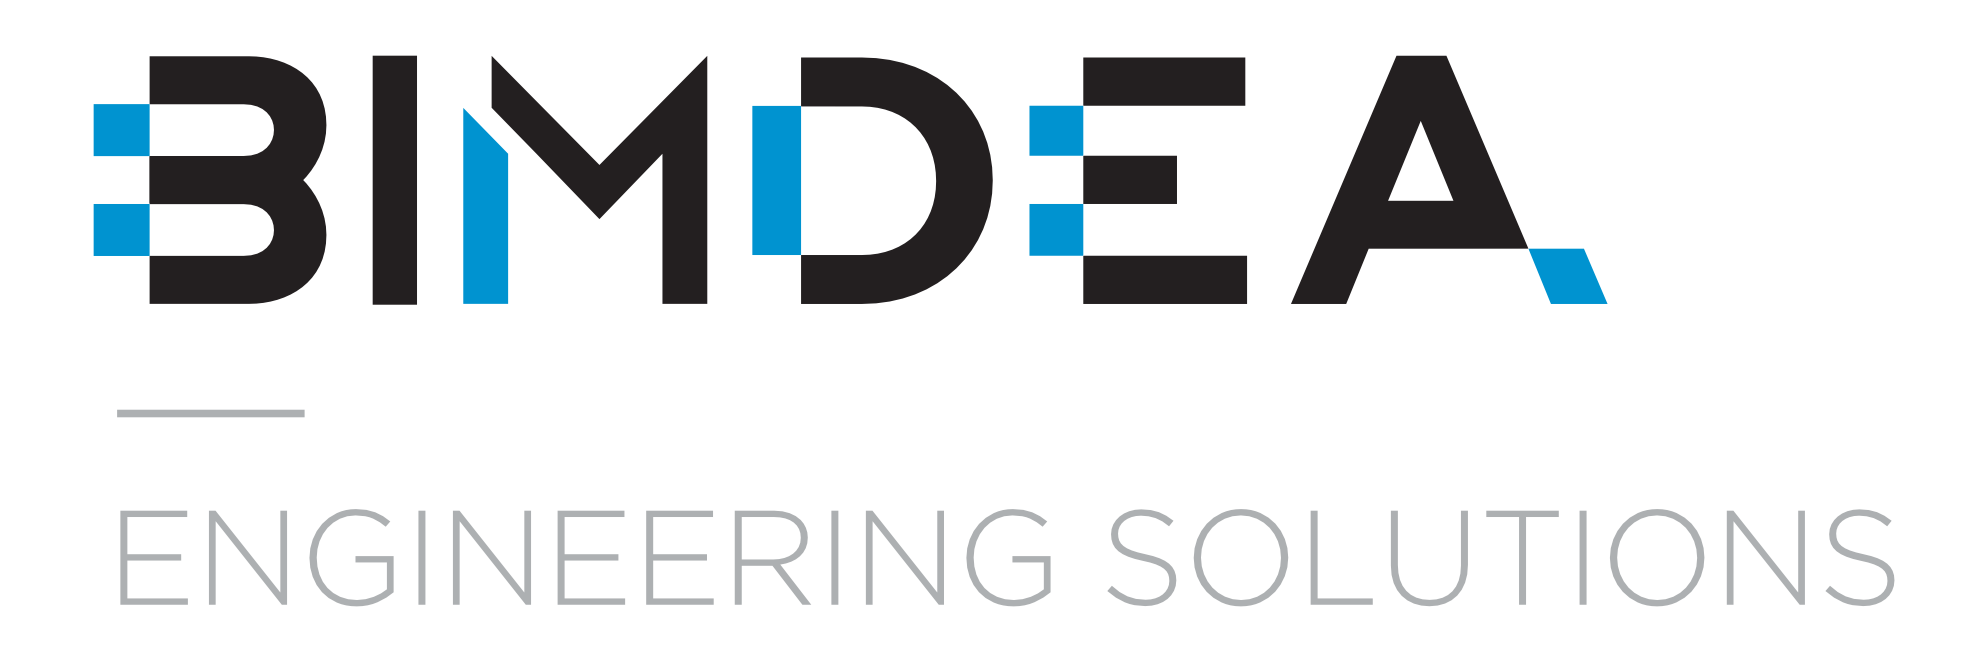 BIMDEA logo 1